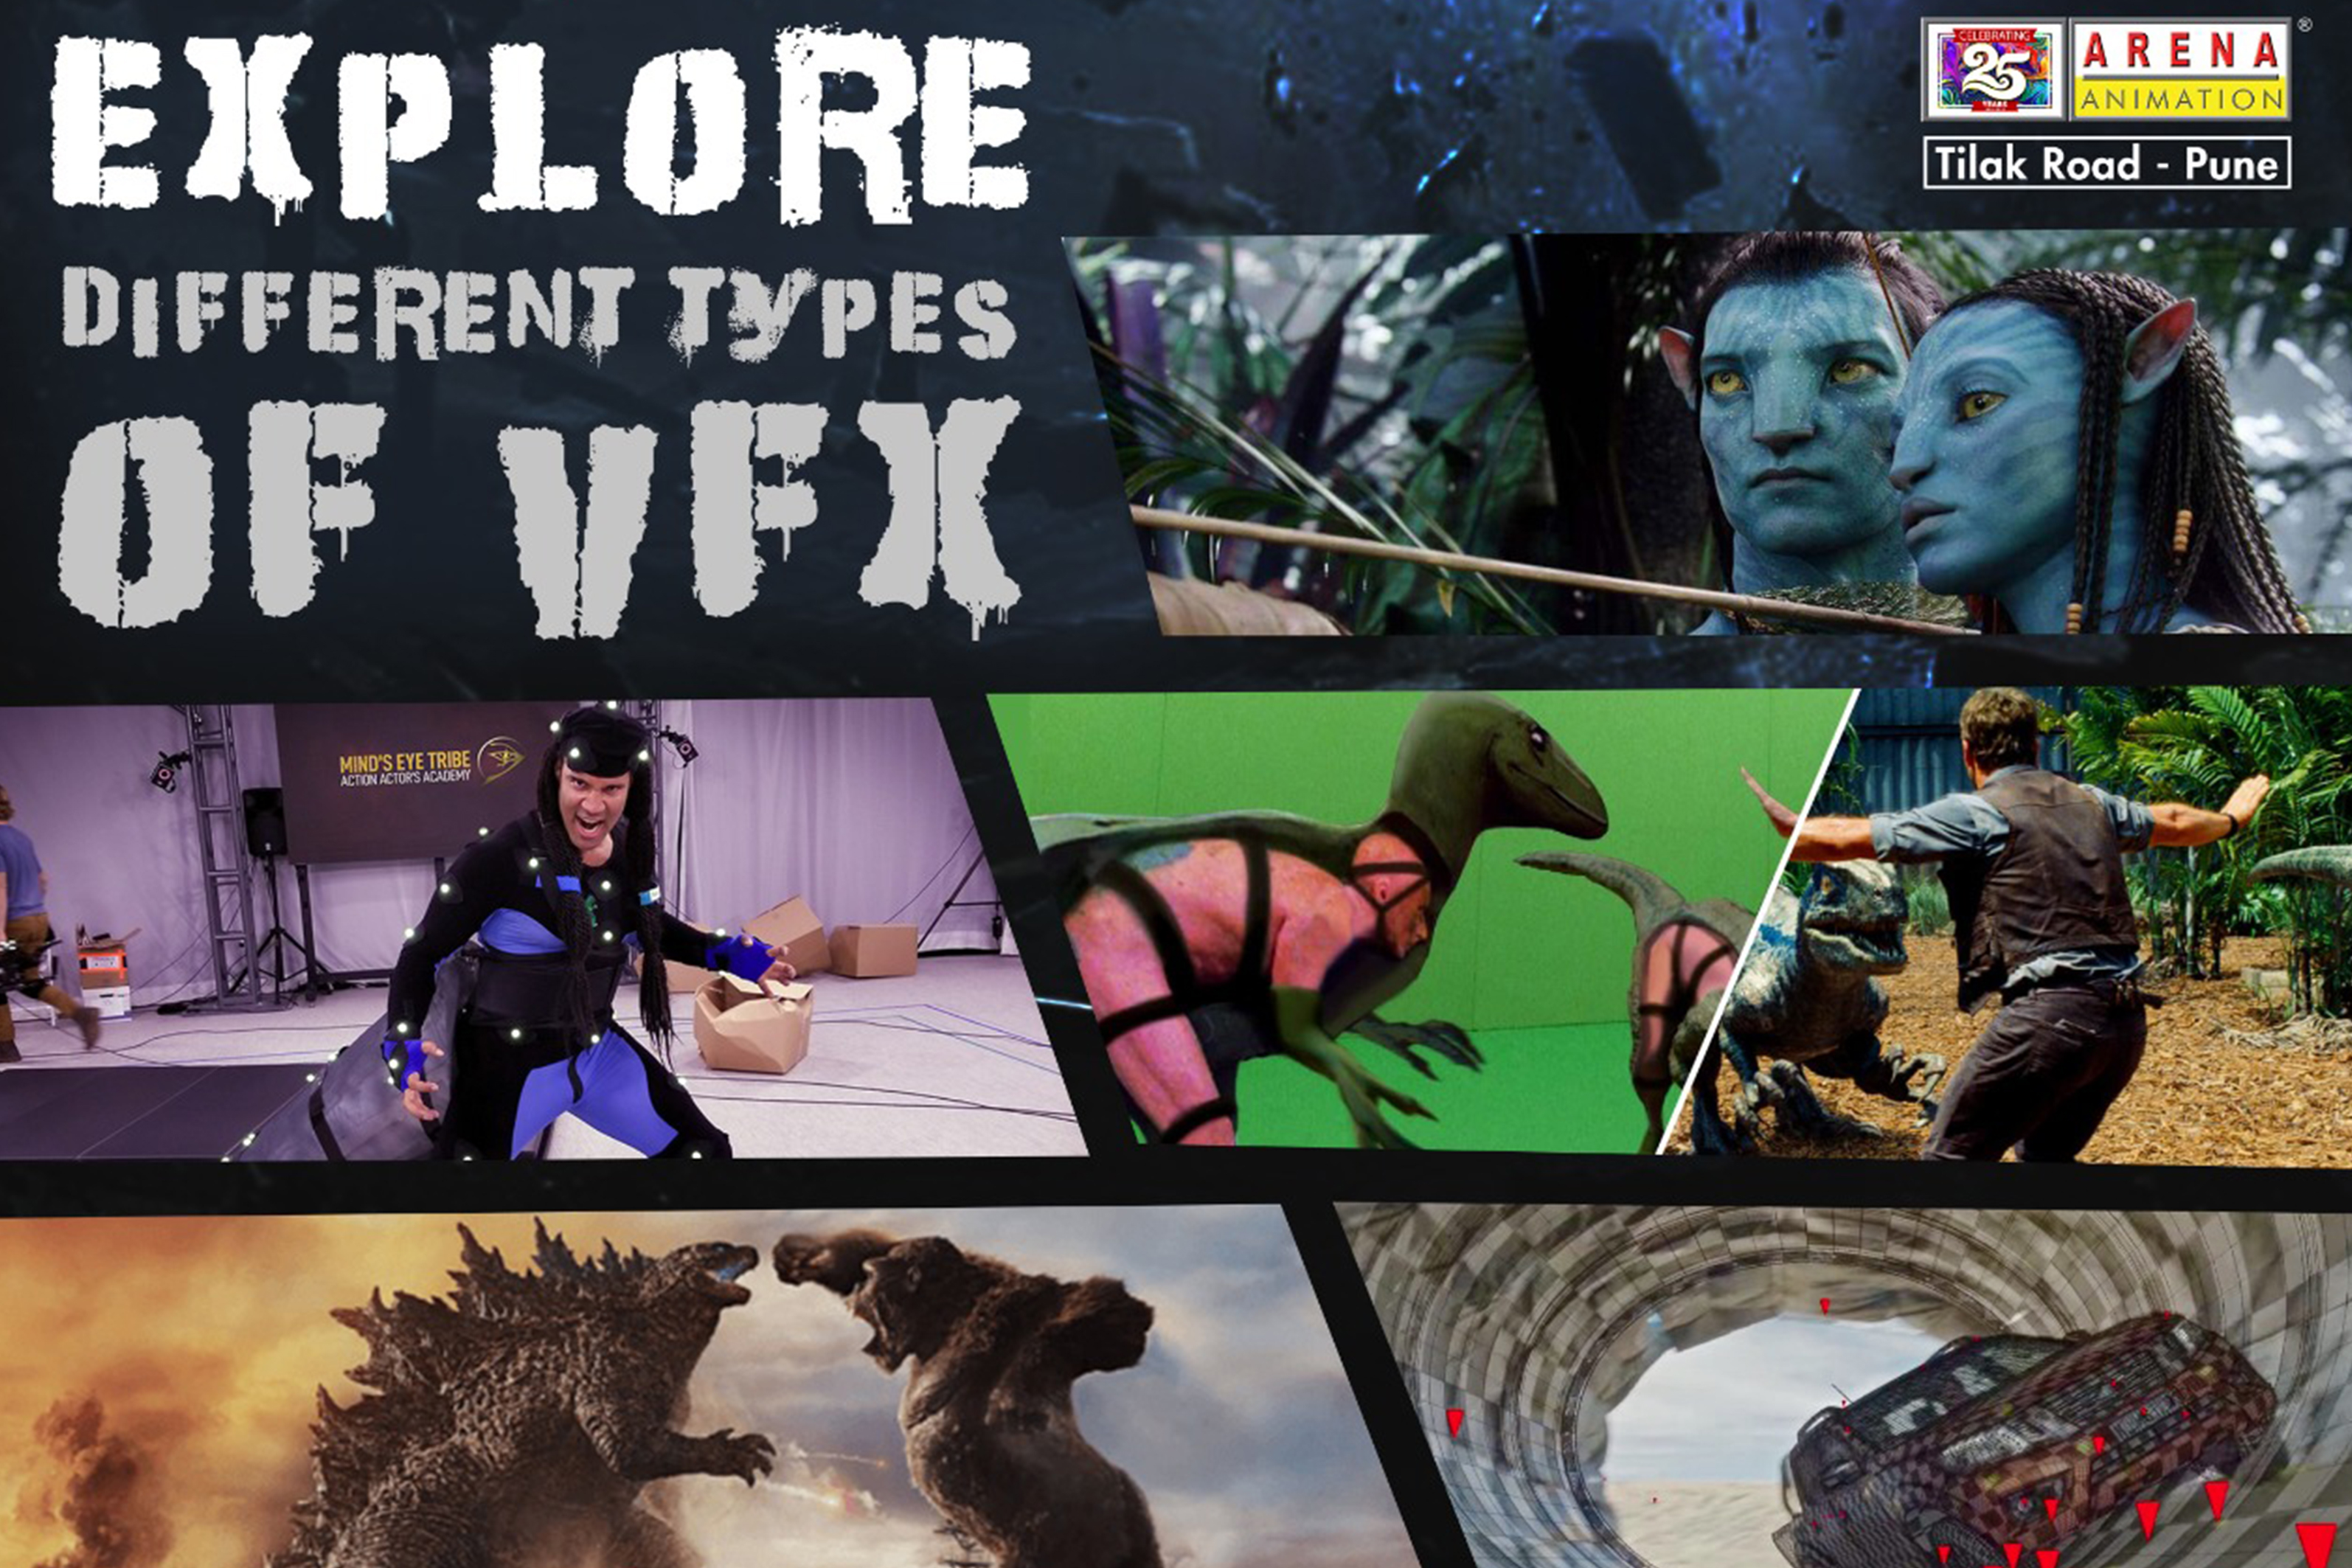 Explore Different Types of VFX - Arena Animation Tilak Road